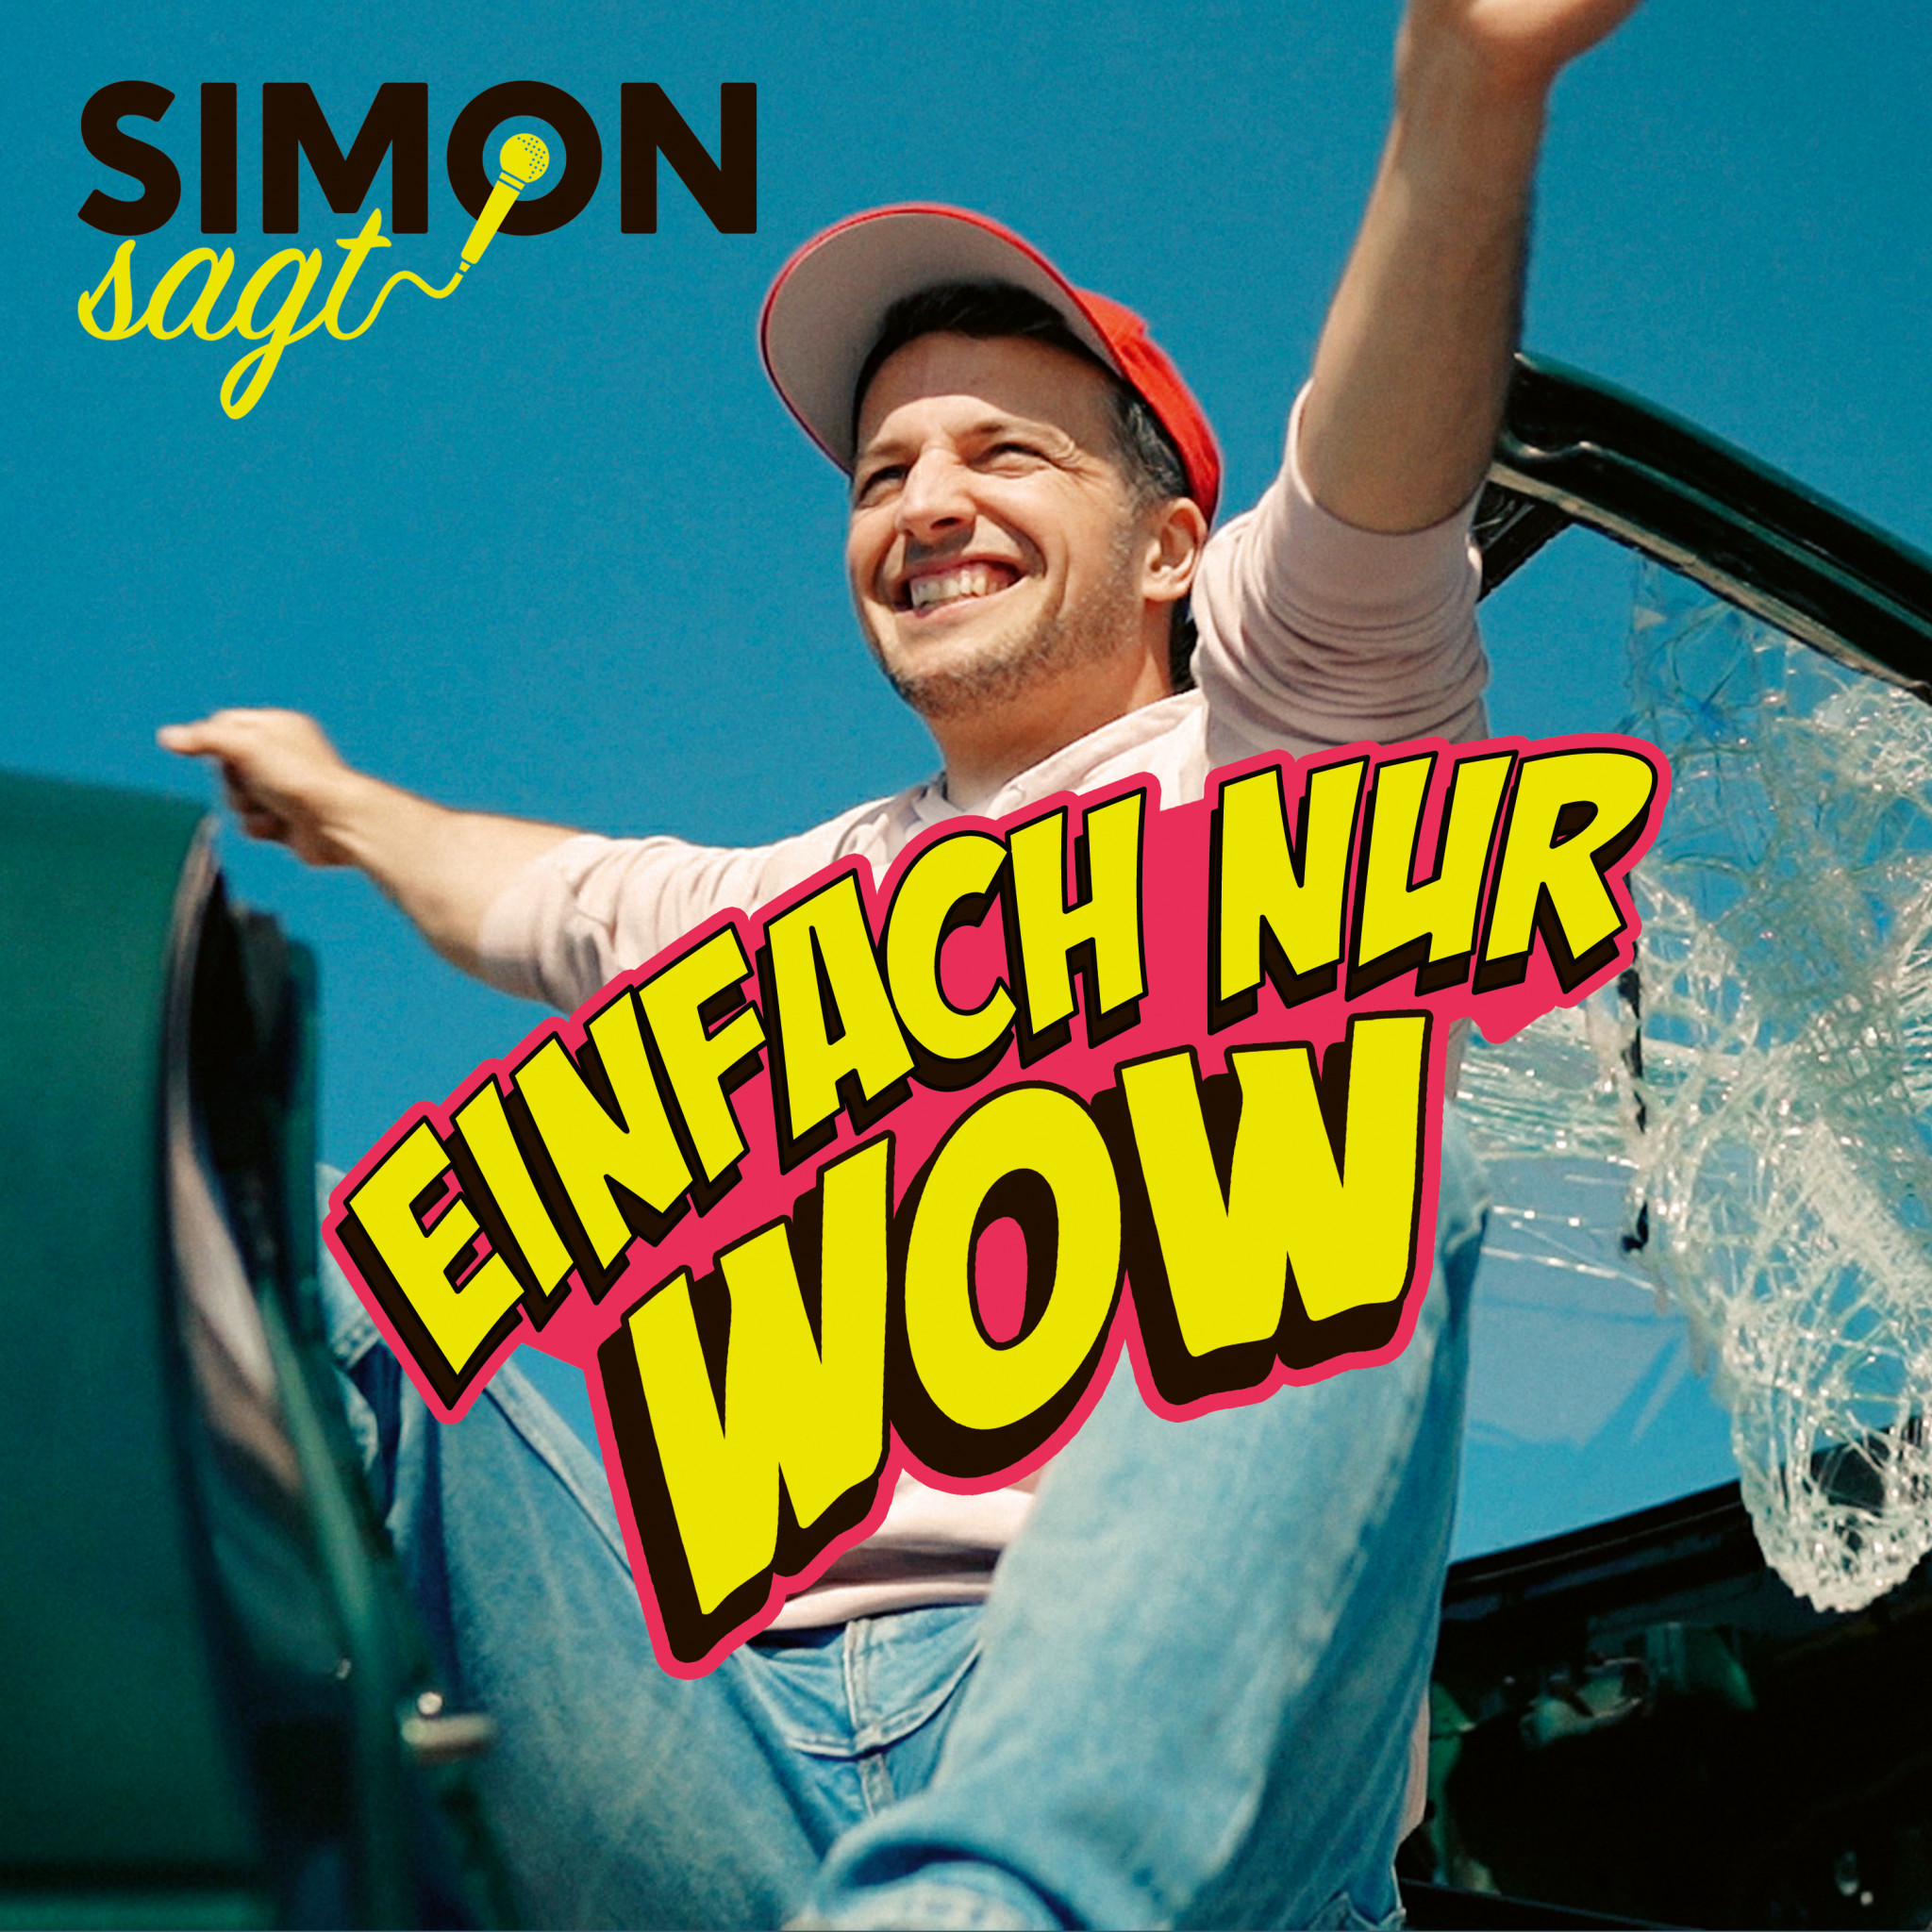 Simon sagt Einfach nur wow! Single Cover